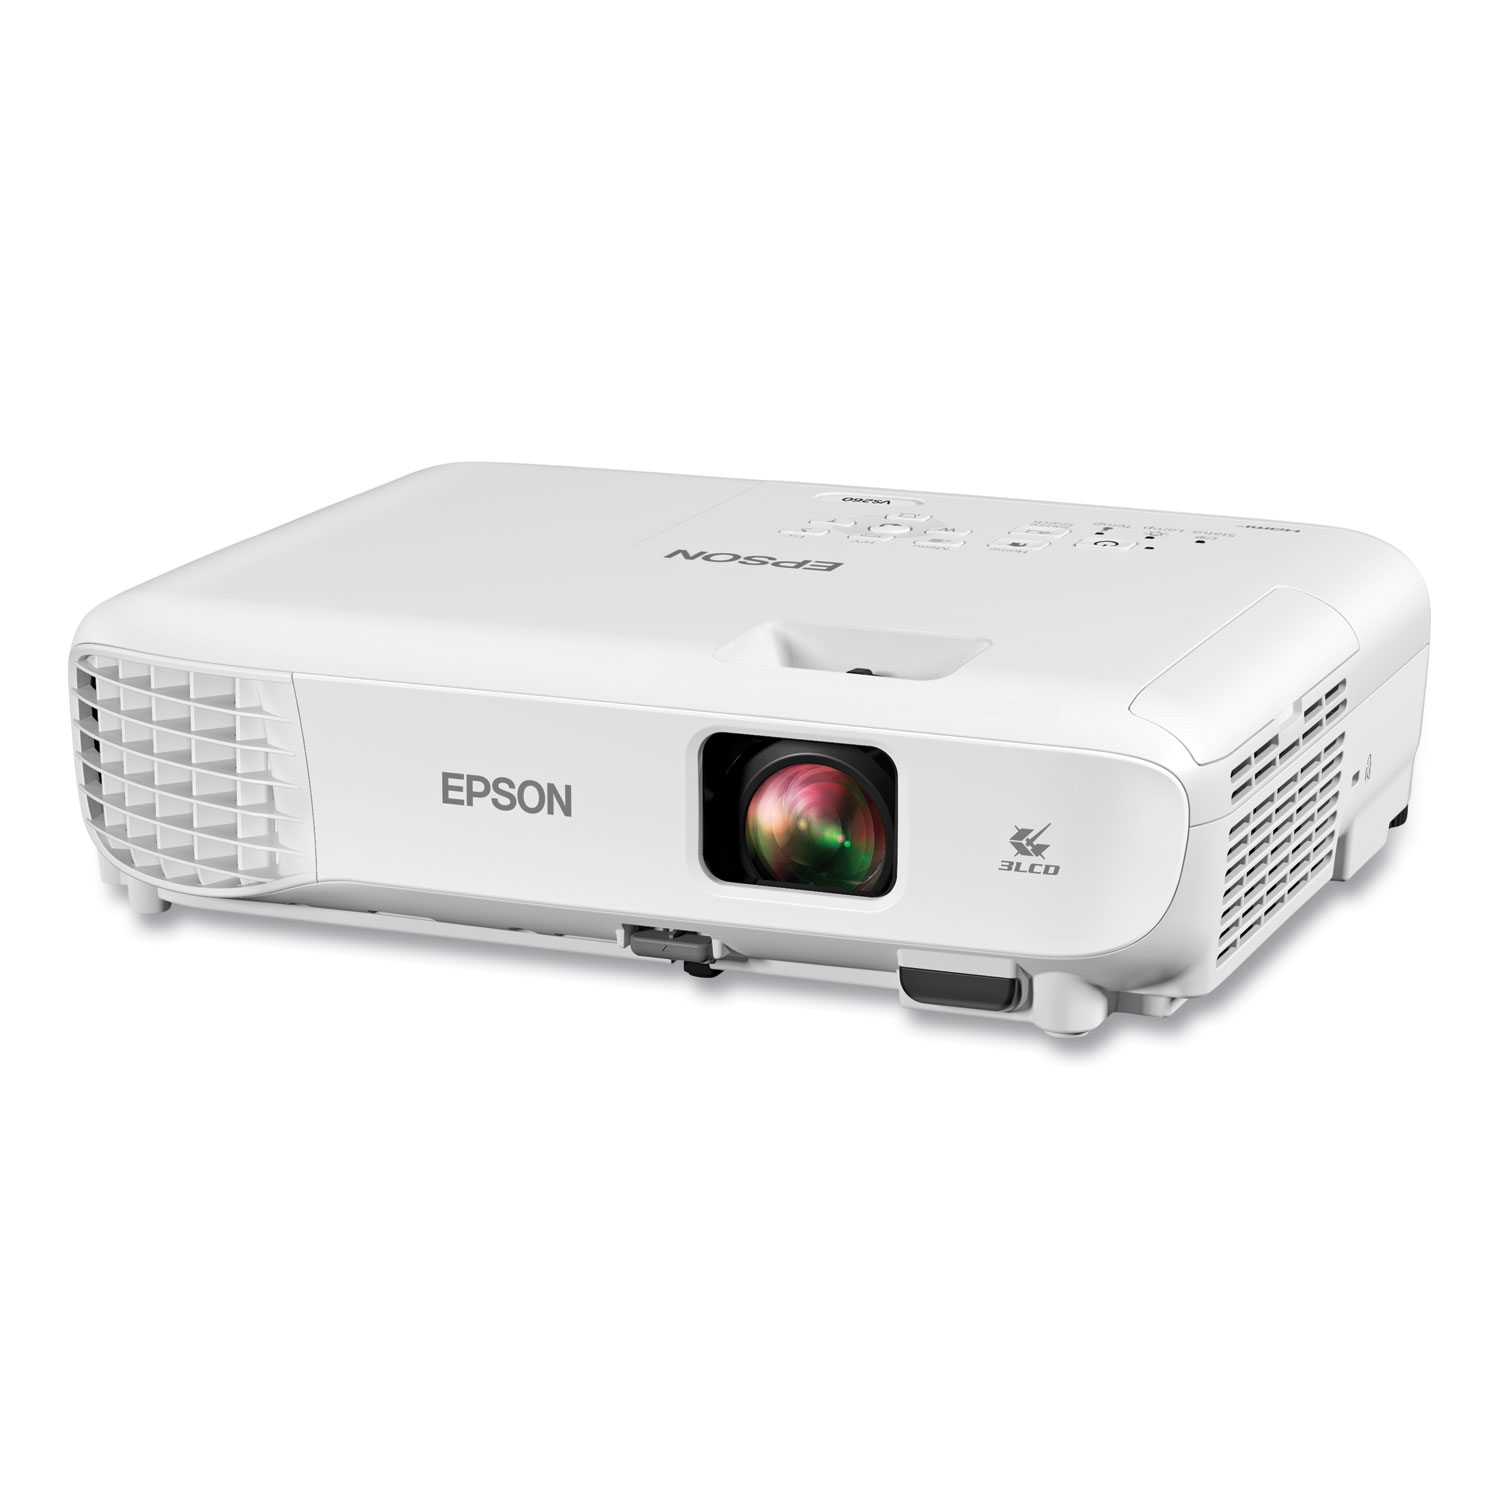  Epson V11H971220 VS260 XGA 3LCD Projector, 3,300 lm, 1024 x 768 Pixels (EPSV11H971220) 